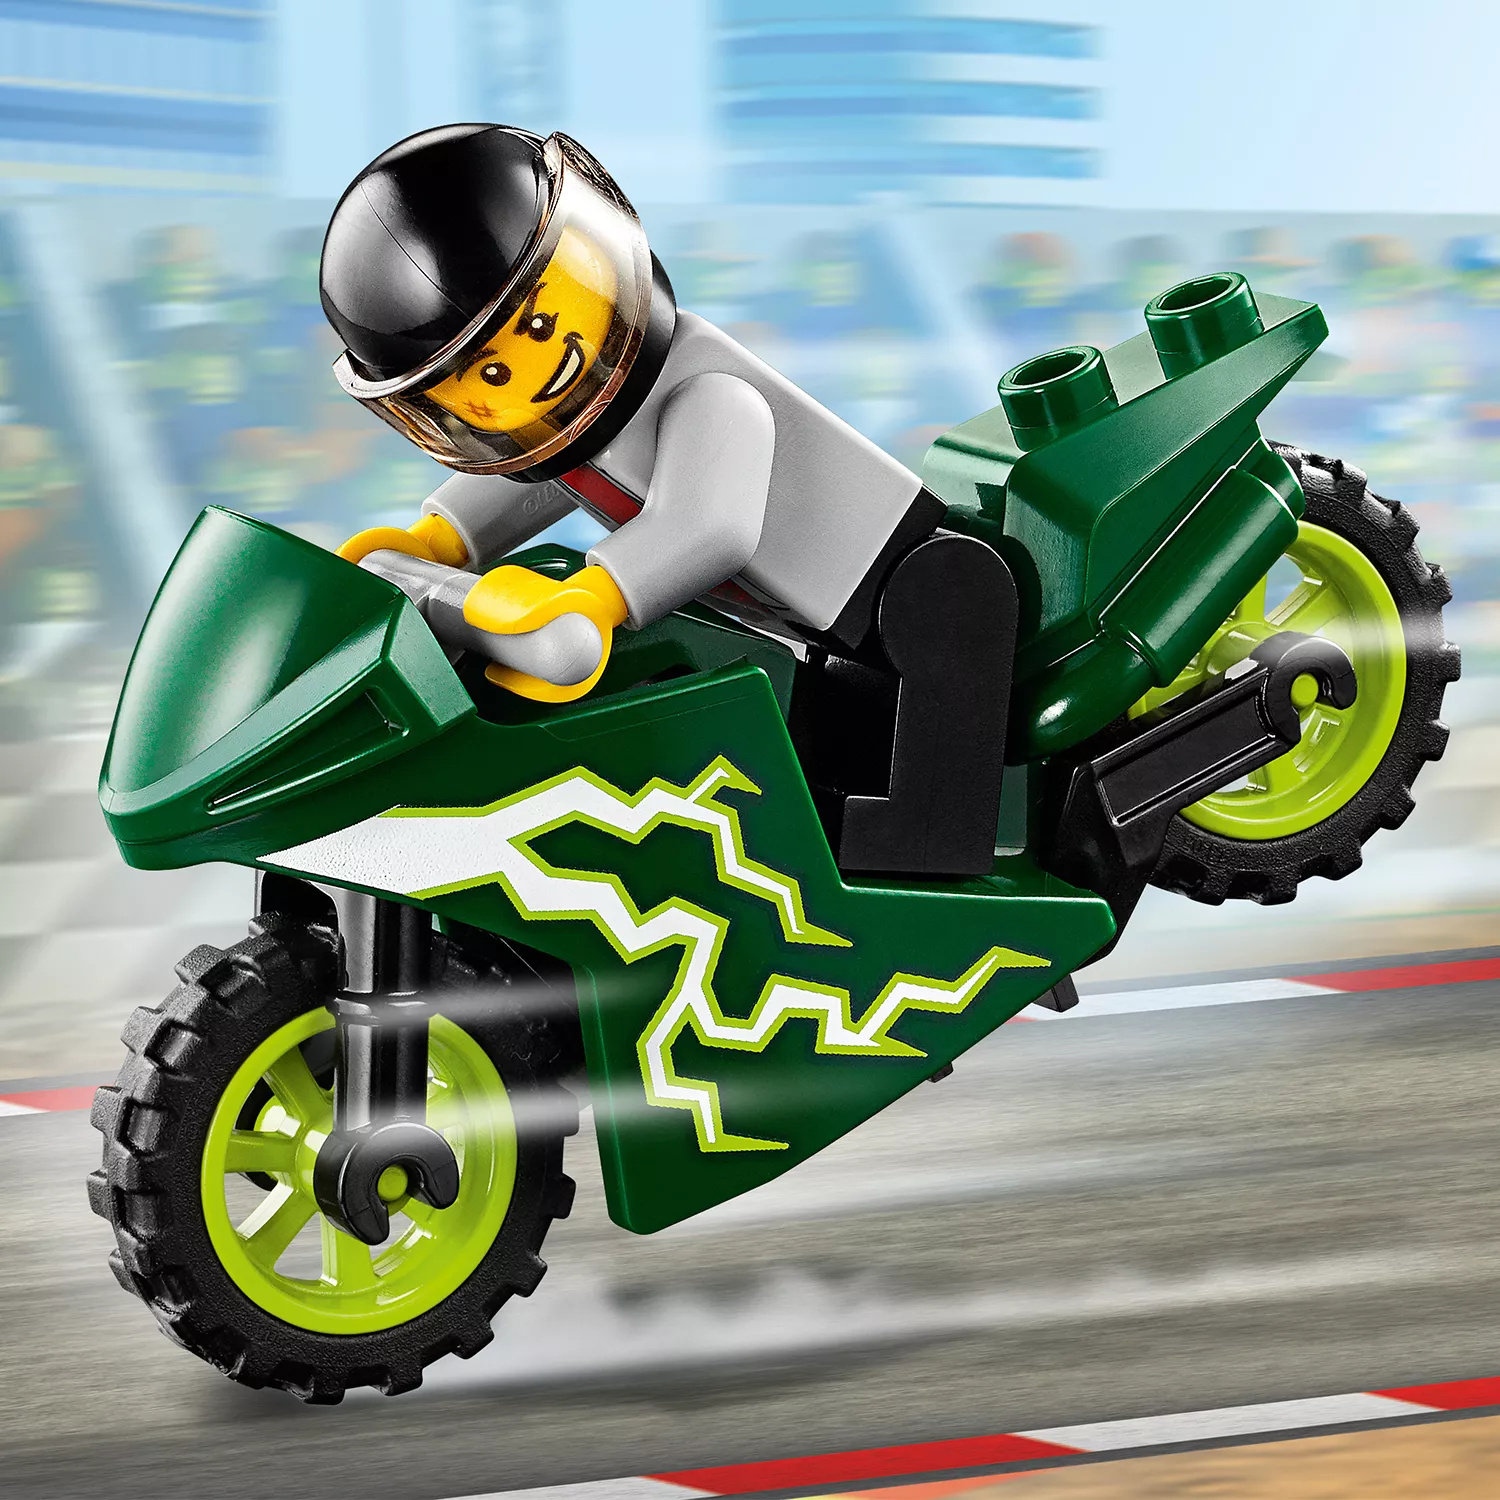 LEGO City Stunt-Team - 60255